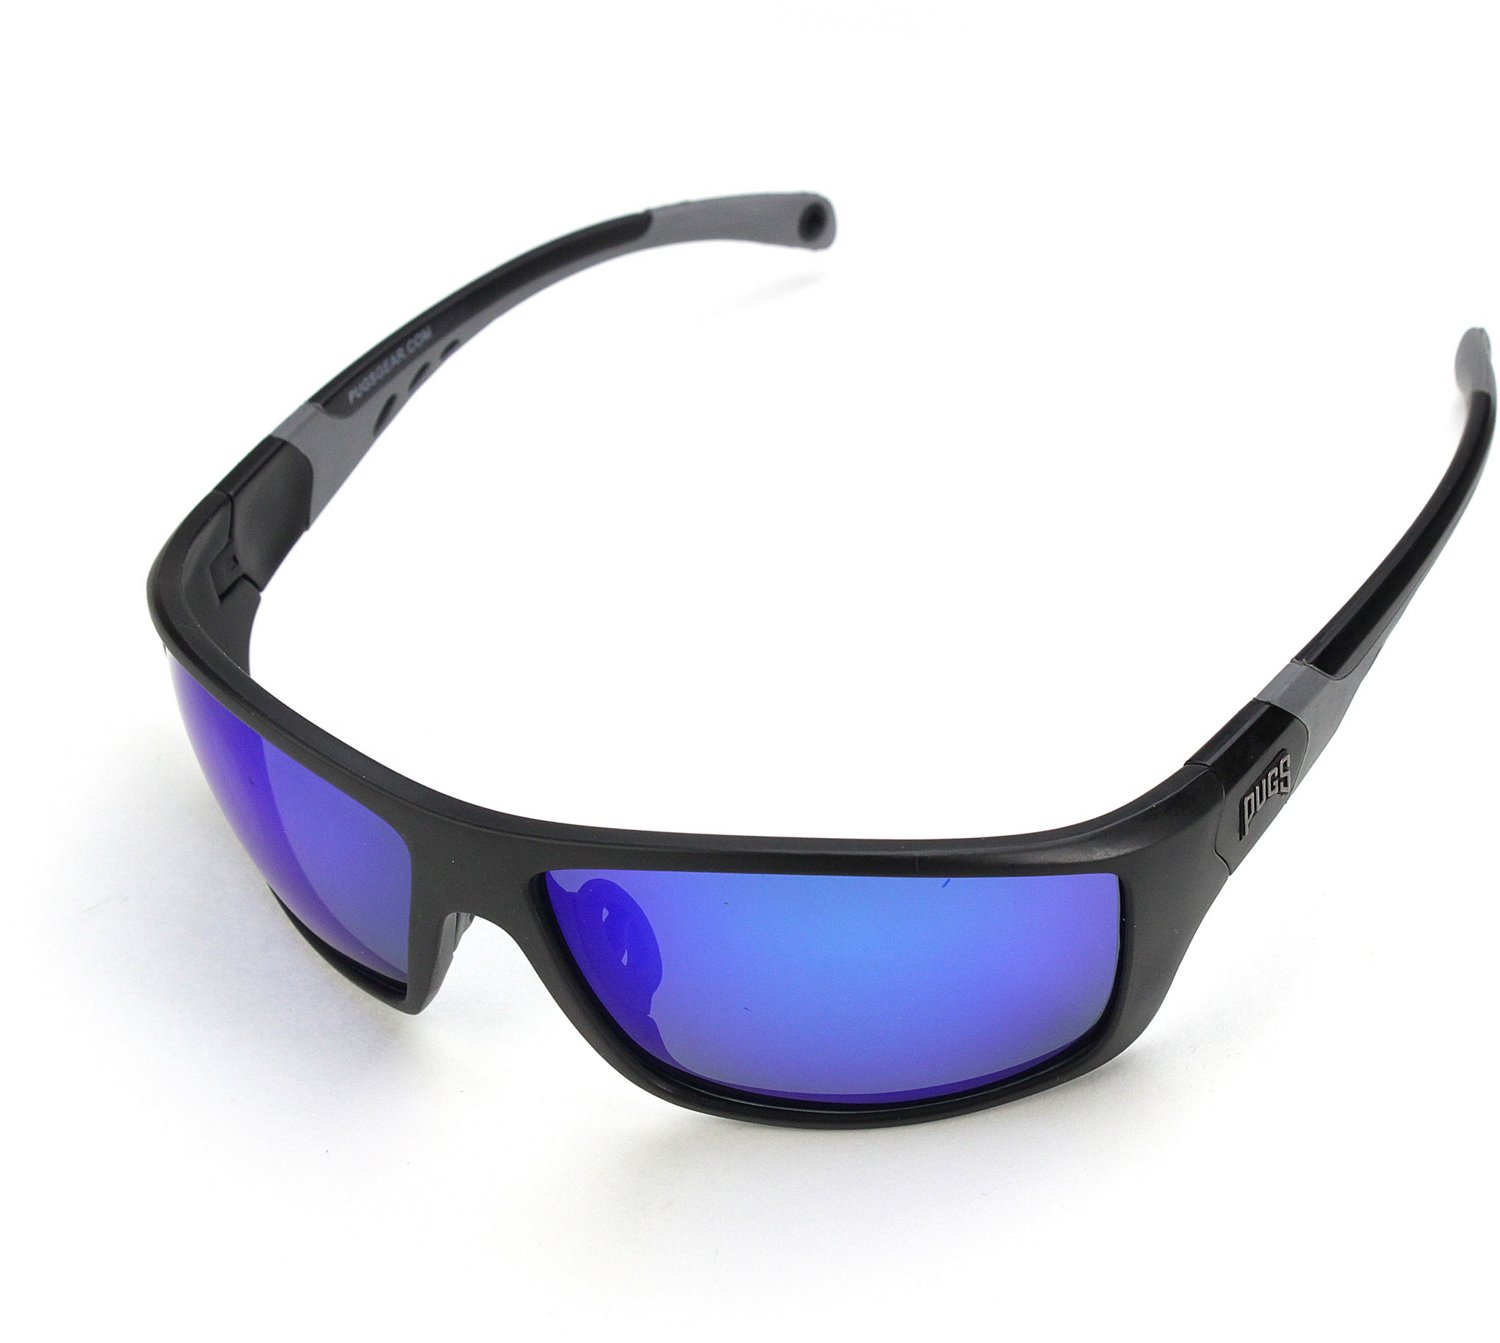 PUGS Sunglasses Black Metal Frame & Brown Bows UV400 - NWT style 1604